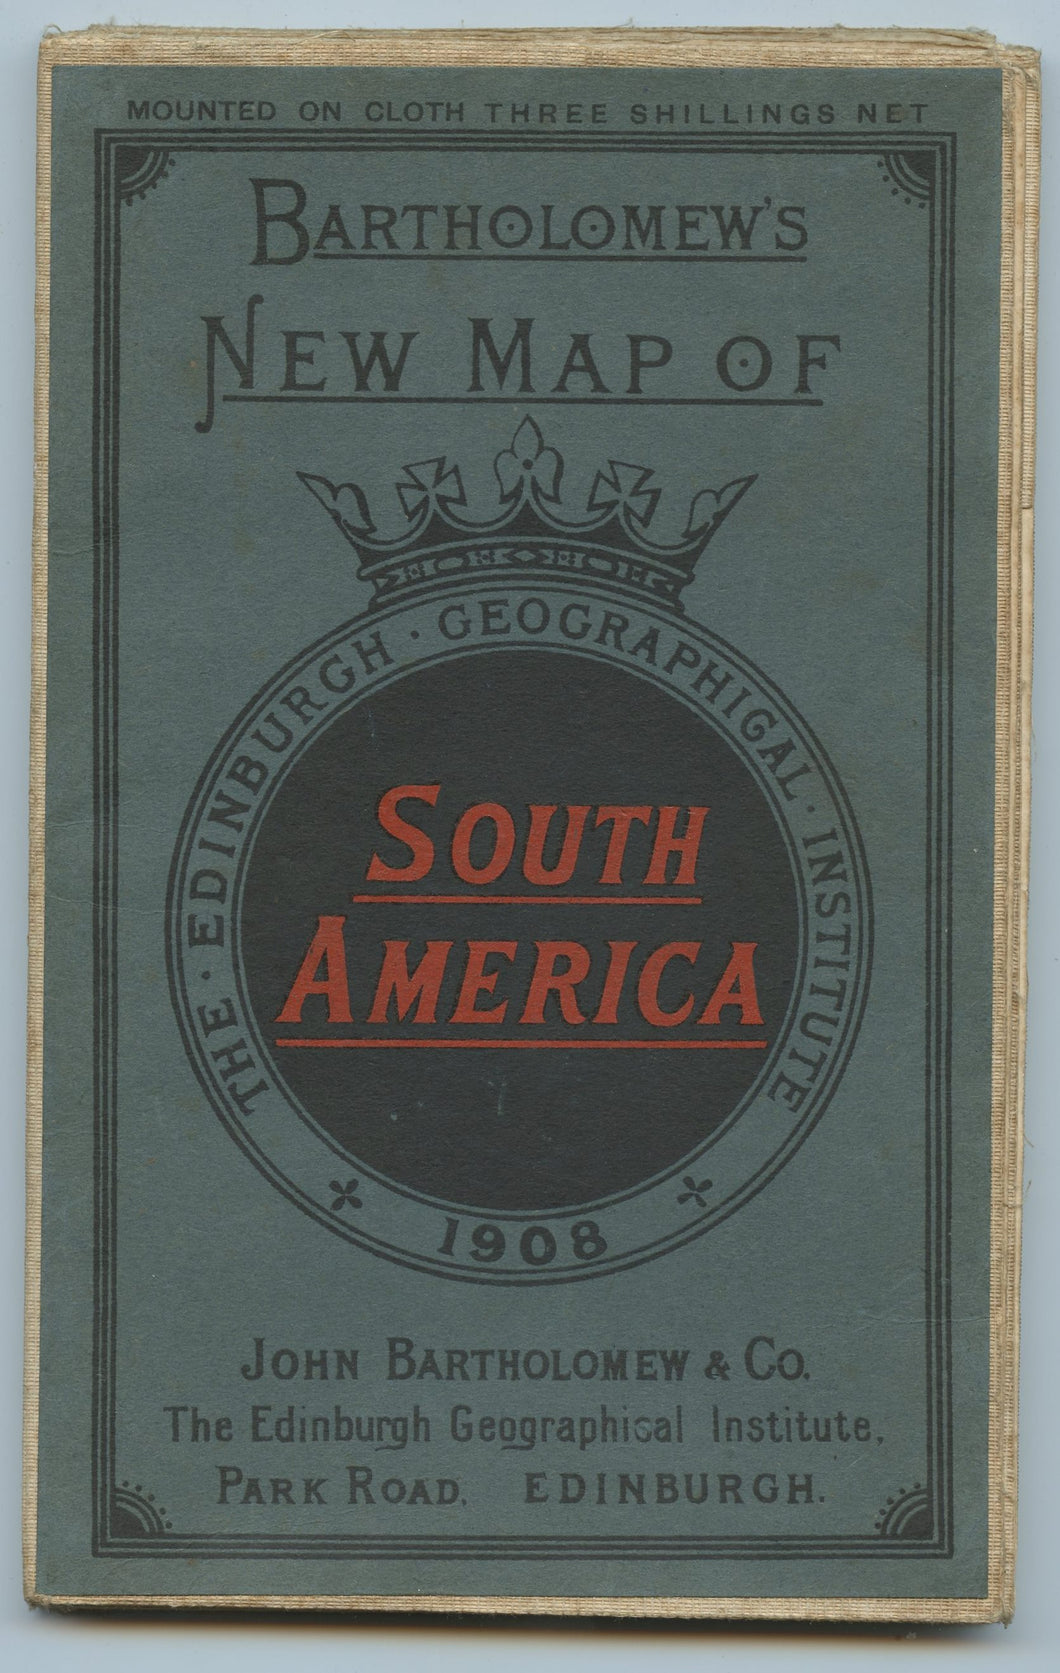 Bartholomew's New Map of South America